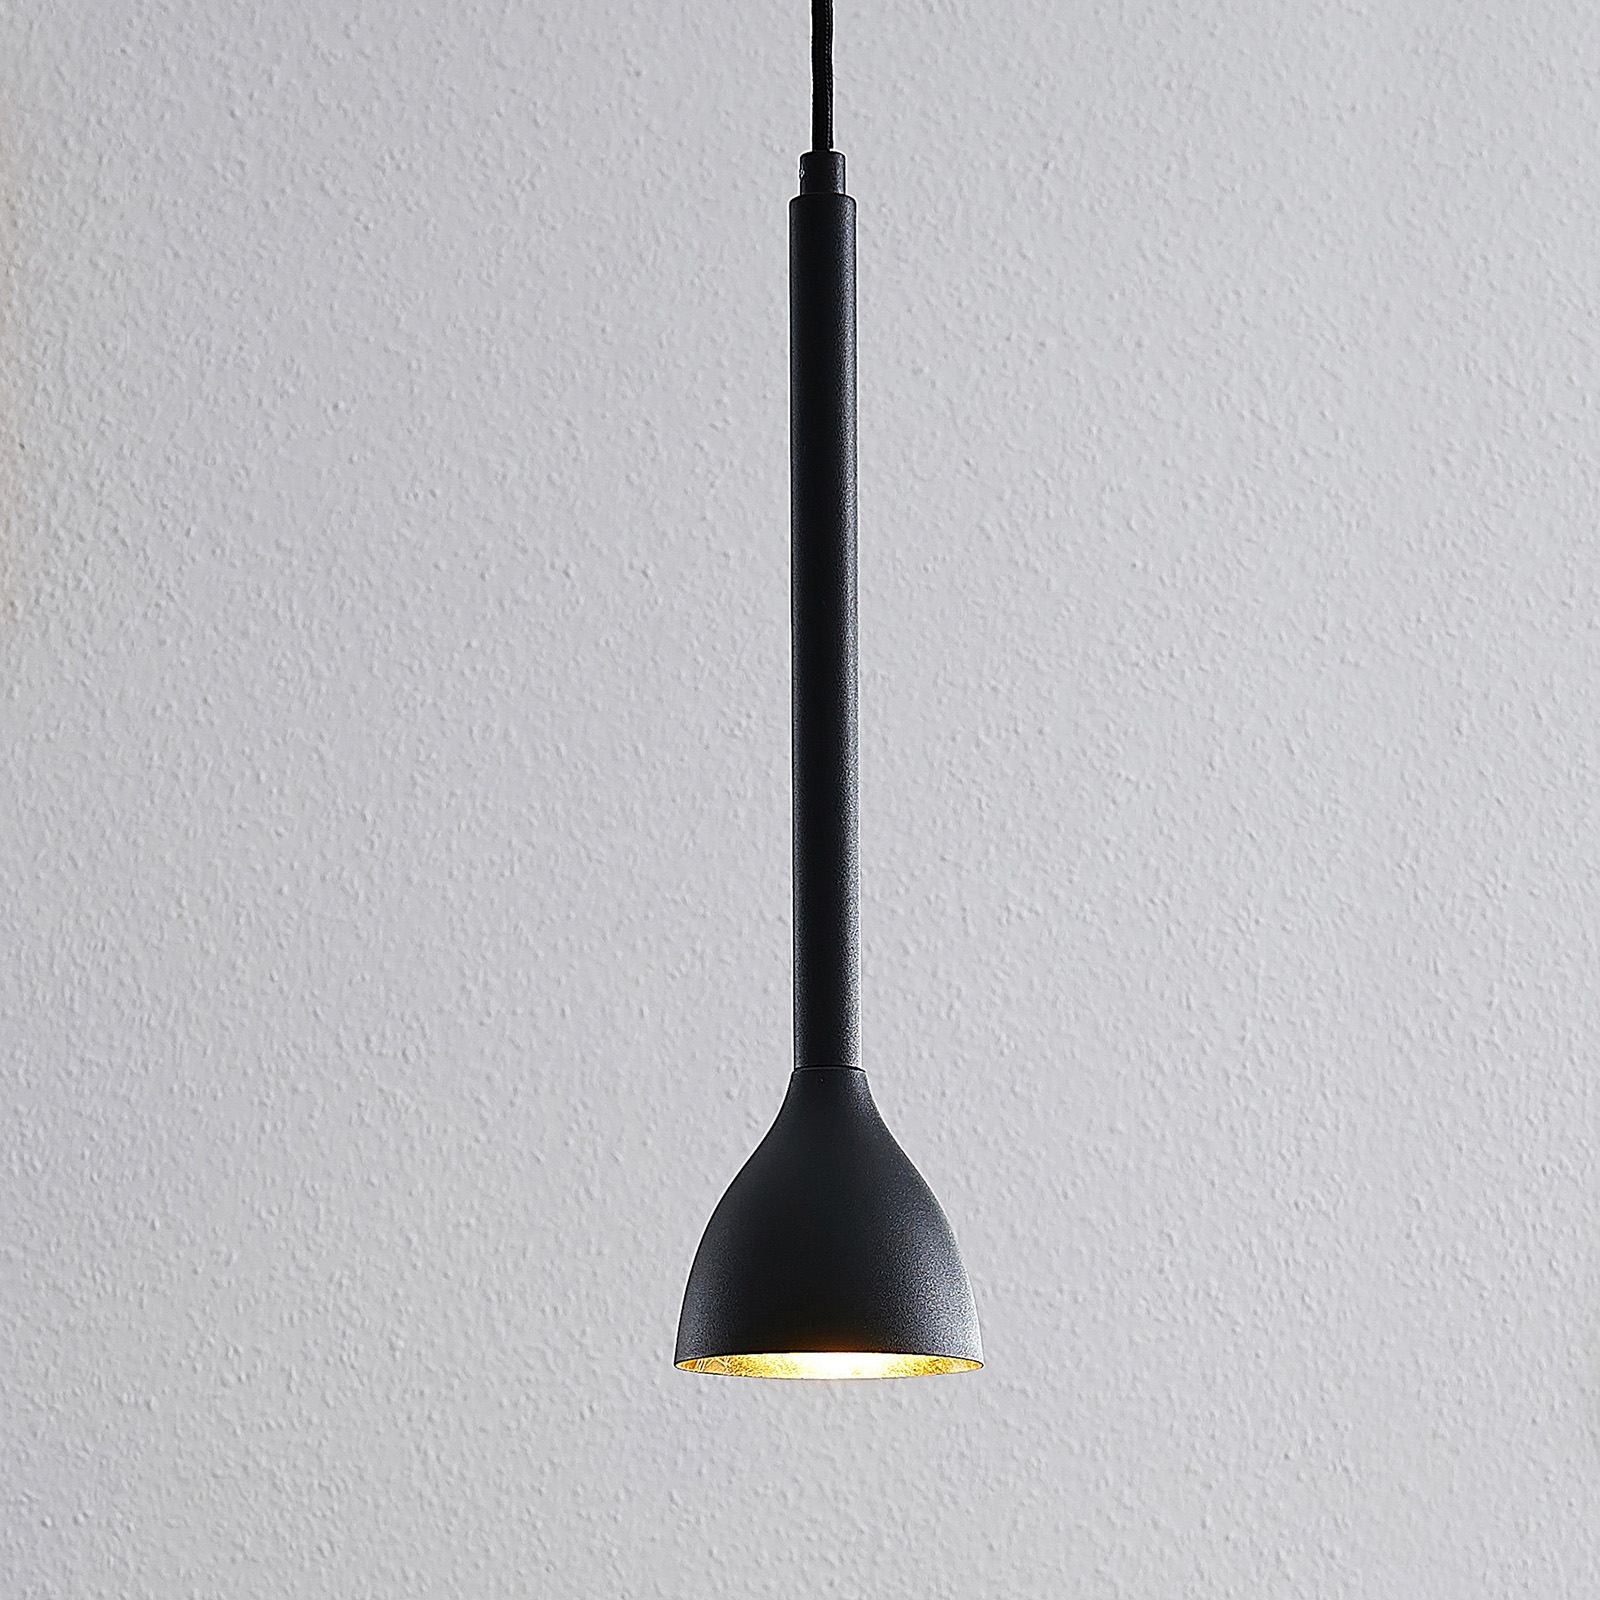 Hanglamp Nordwin, 1 lampje, zwart-goud